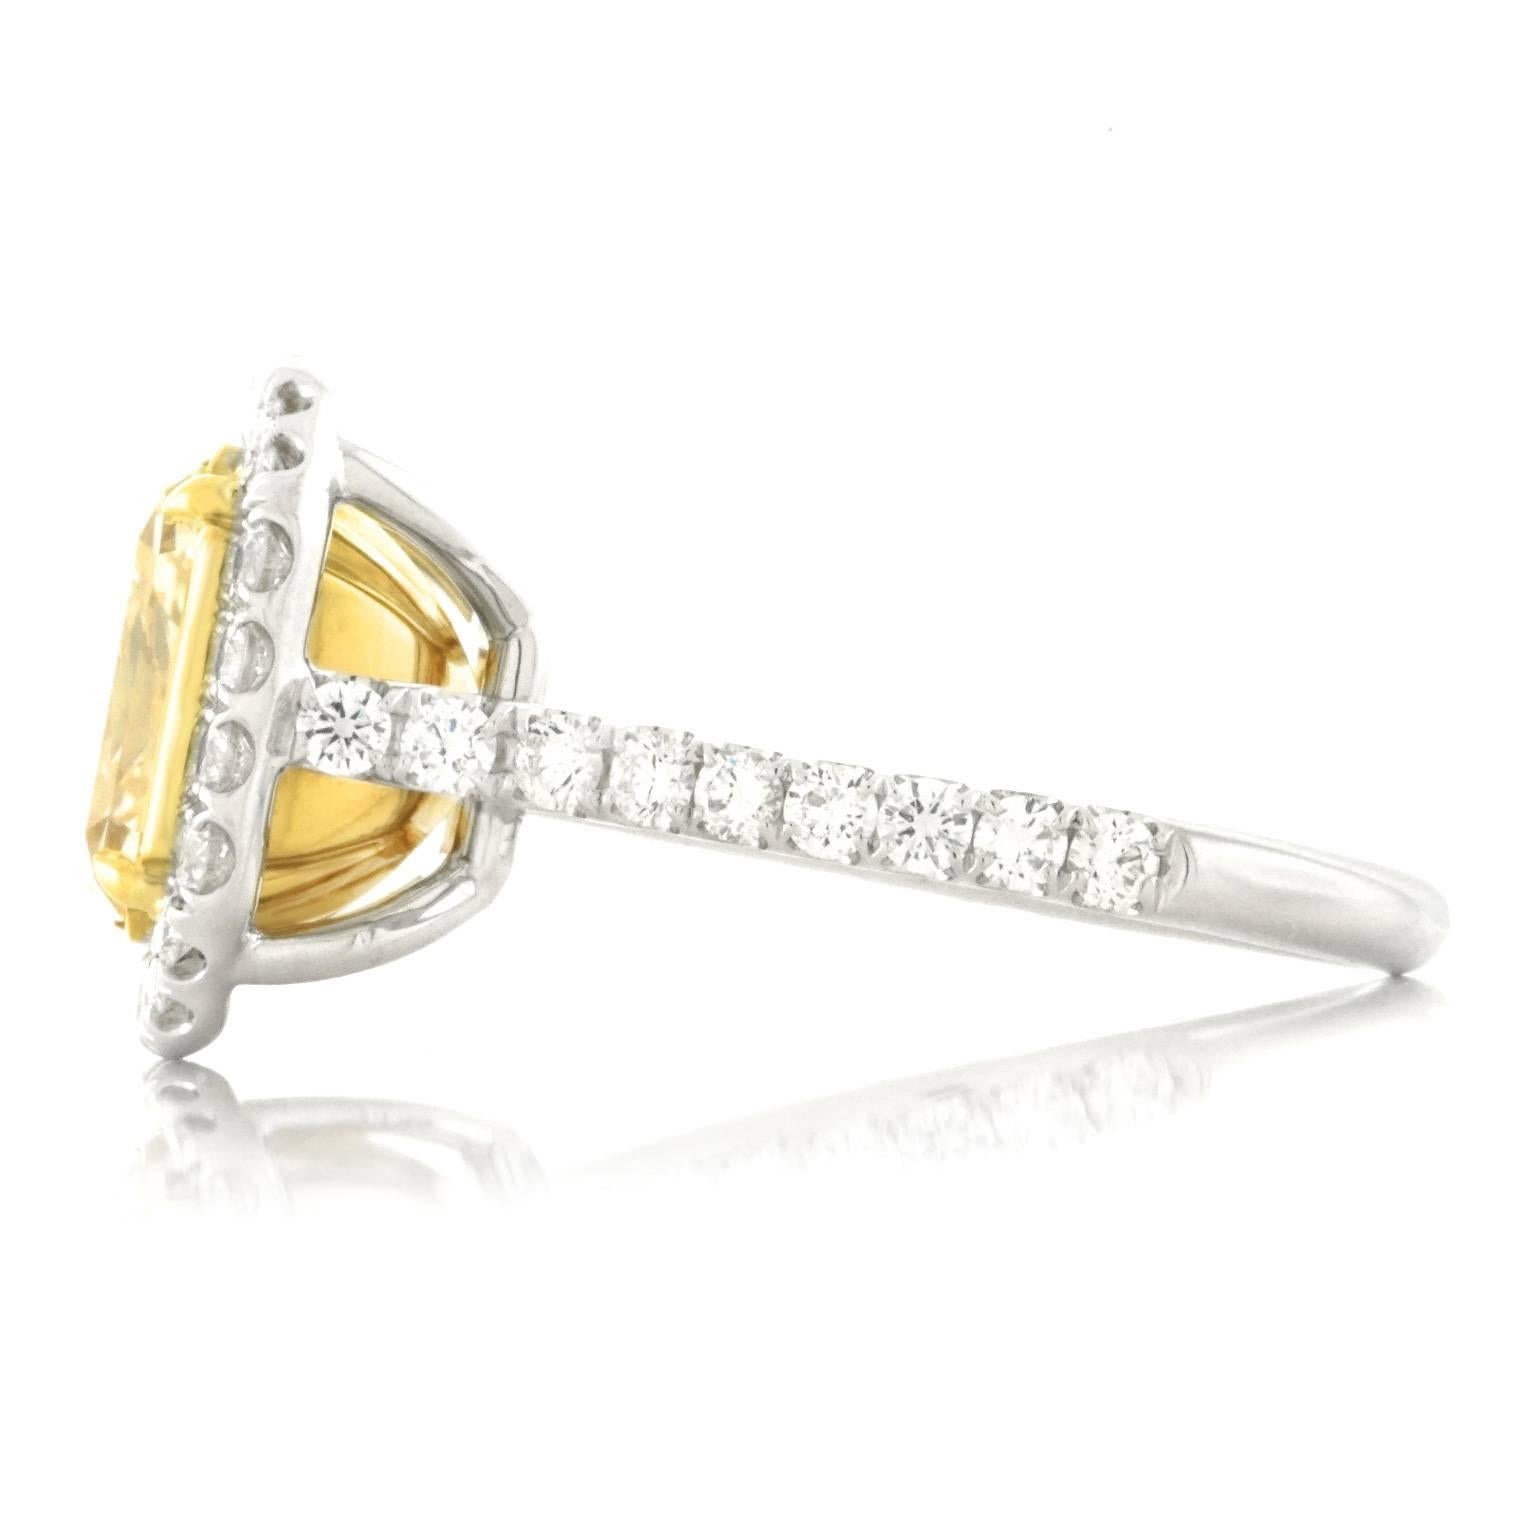 4.37 Carat Fancy Yellow Diamond Ring EGL Report 3